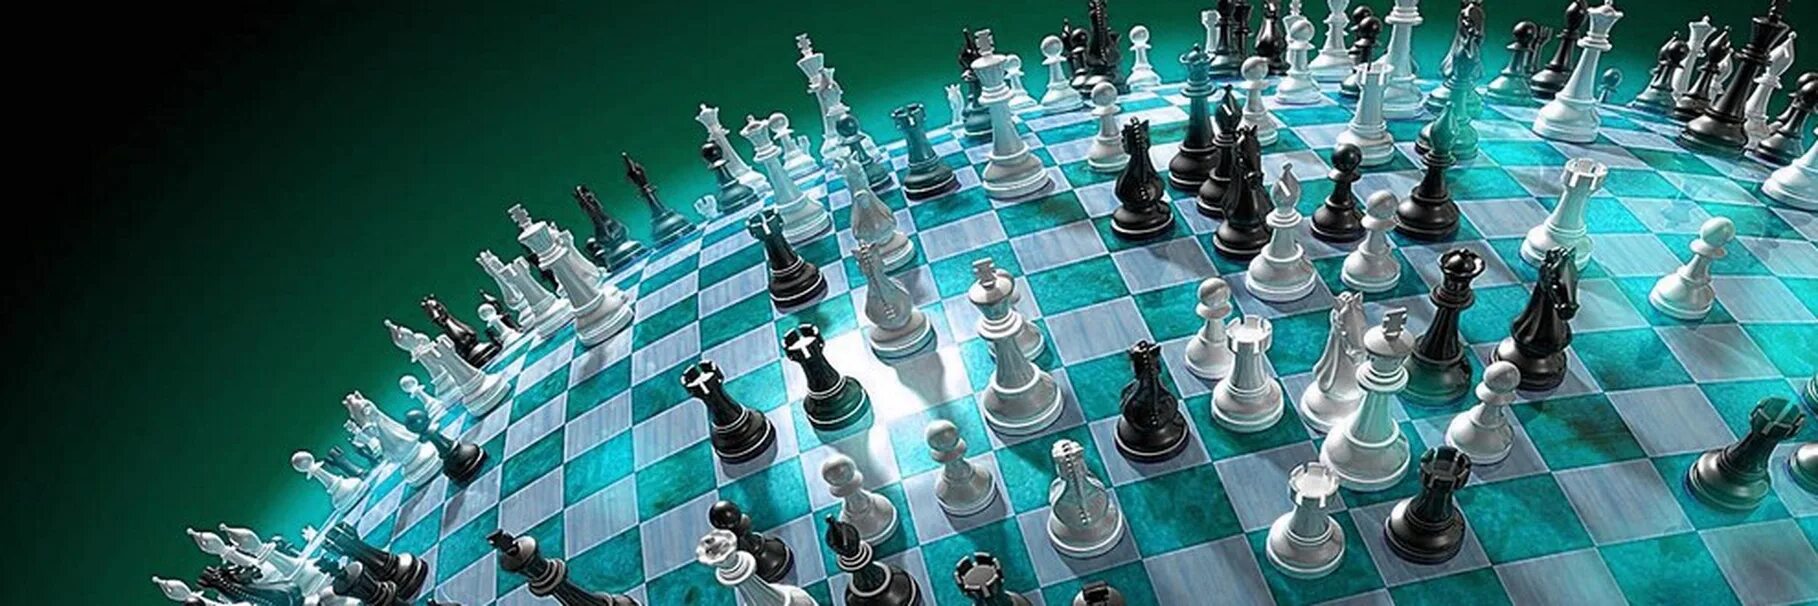 Шахматная планета живые игроки. Шахматная доска политика. Планета шахмат. Шахматная доска геополитика. Мир шахматная доска.